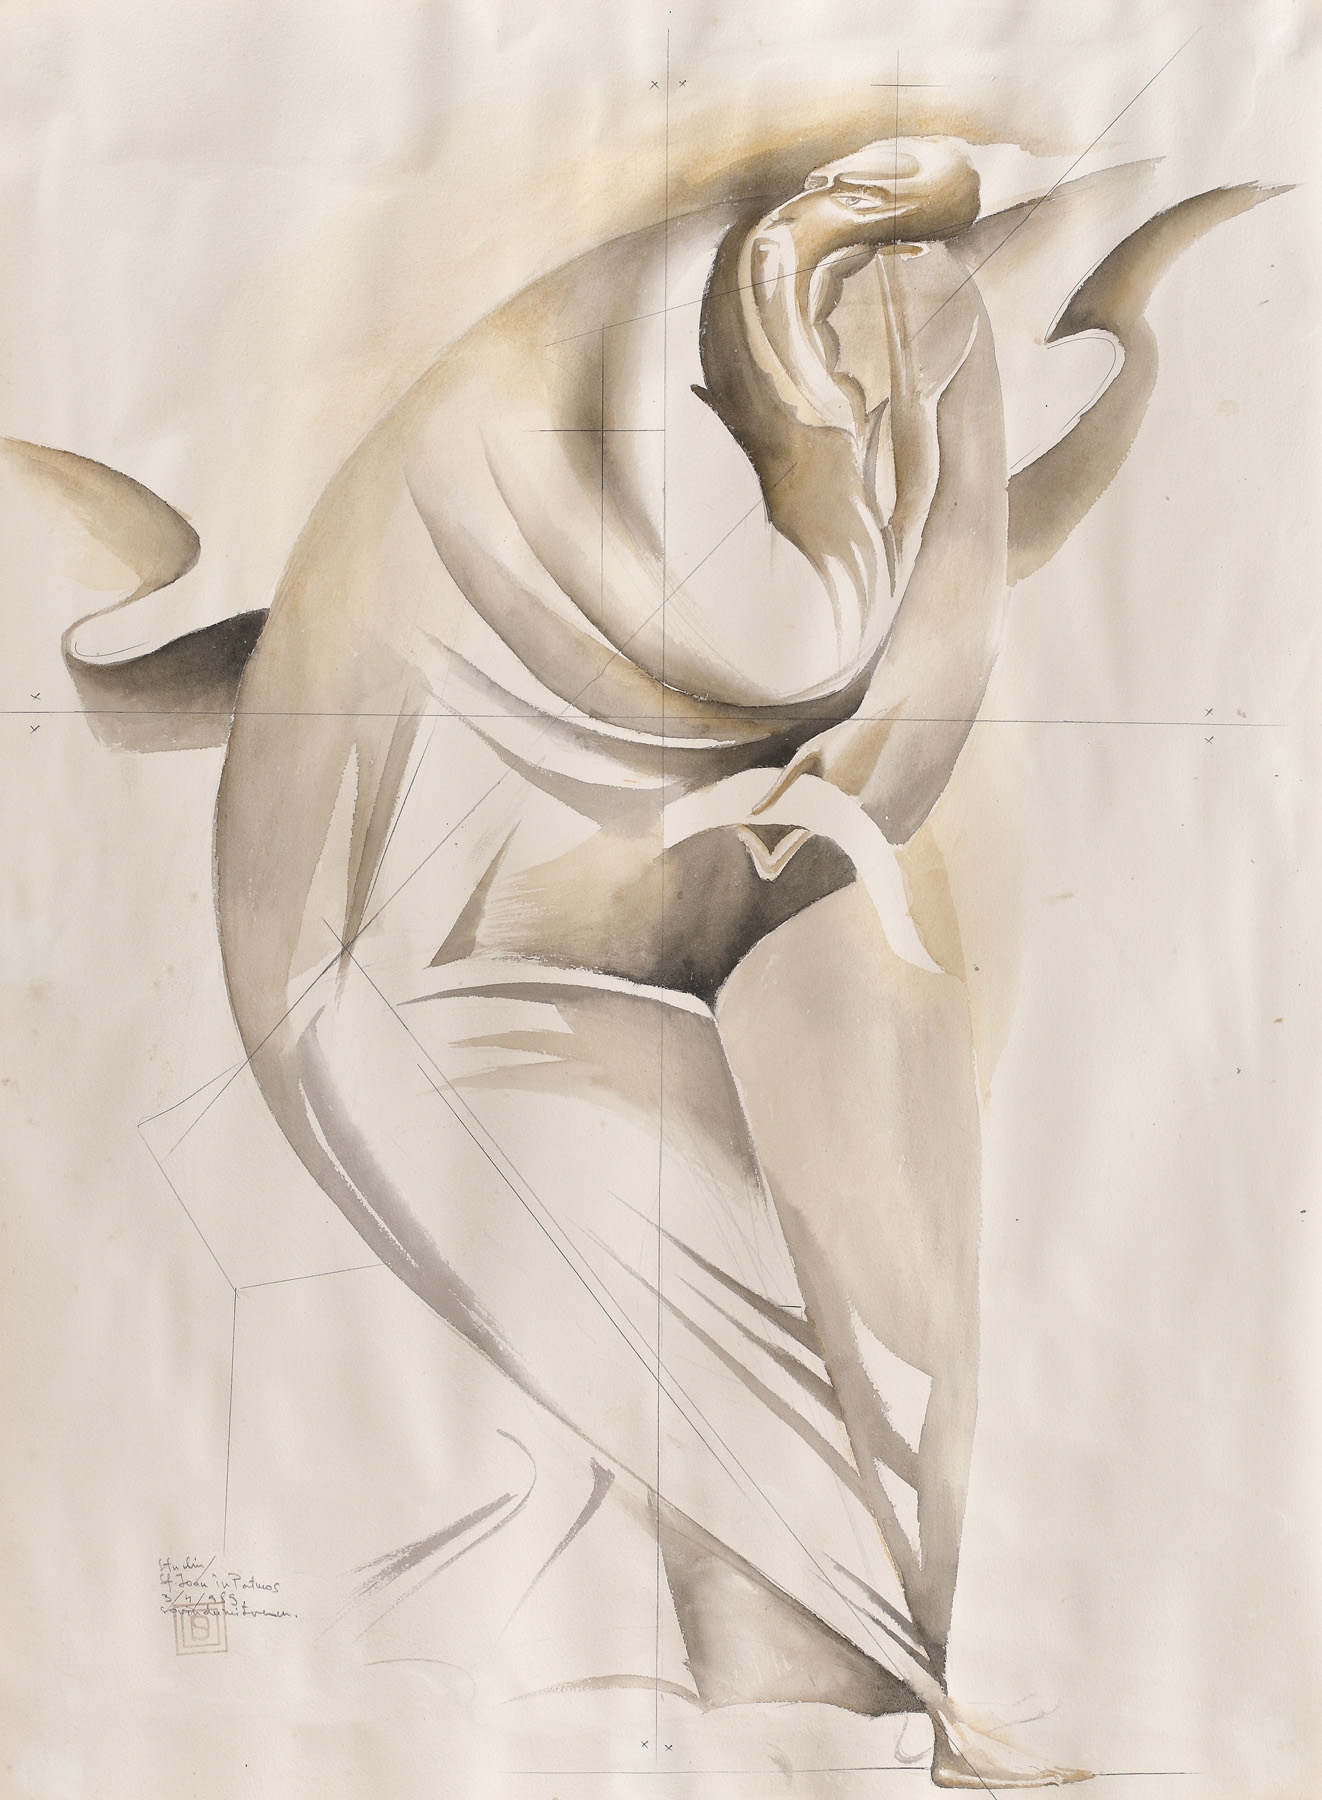 Artwork by Sorin Dumitrescu, Studiu pentru Sf. Ioan în Patmos, Made of watercolor and pencil on paper pasted on cardboard